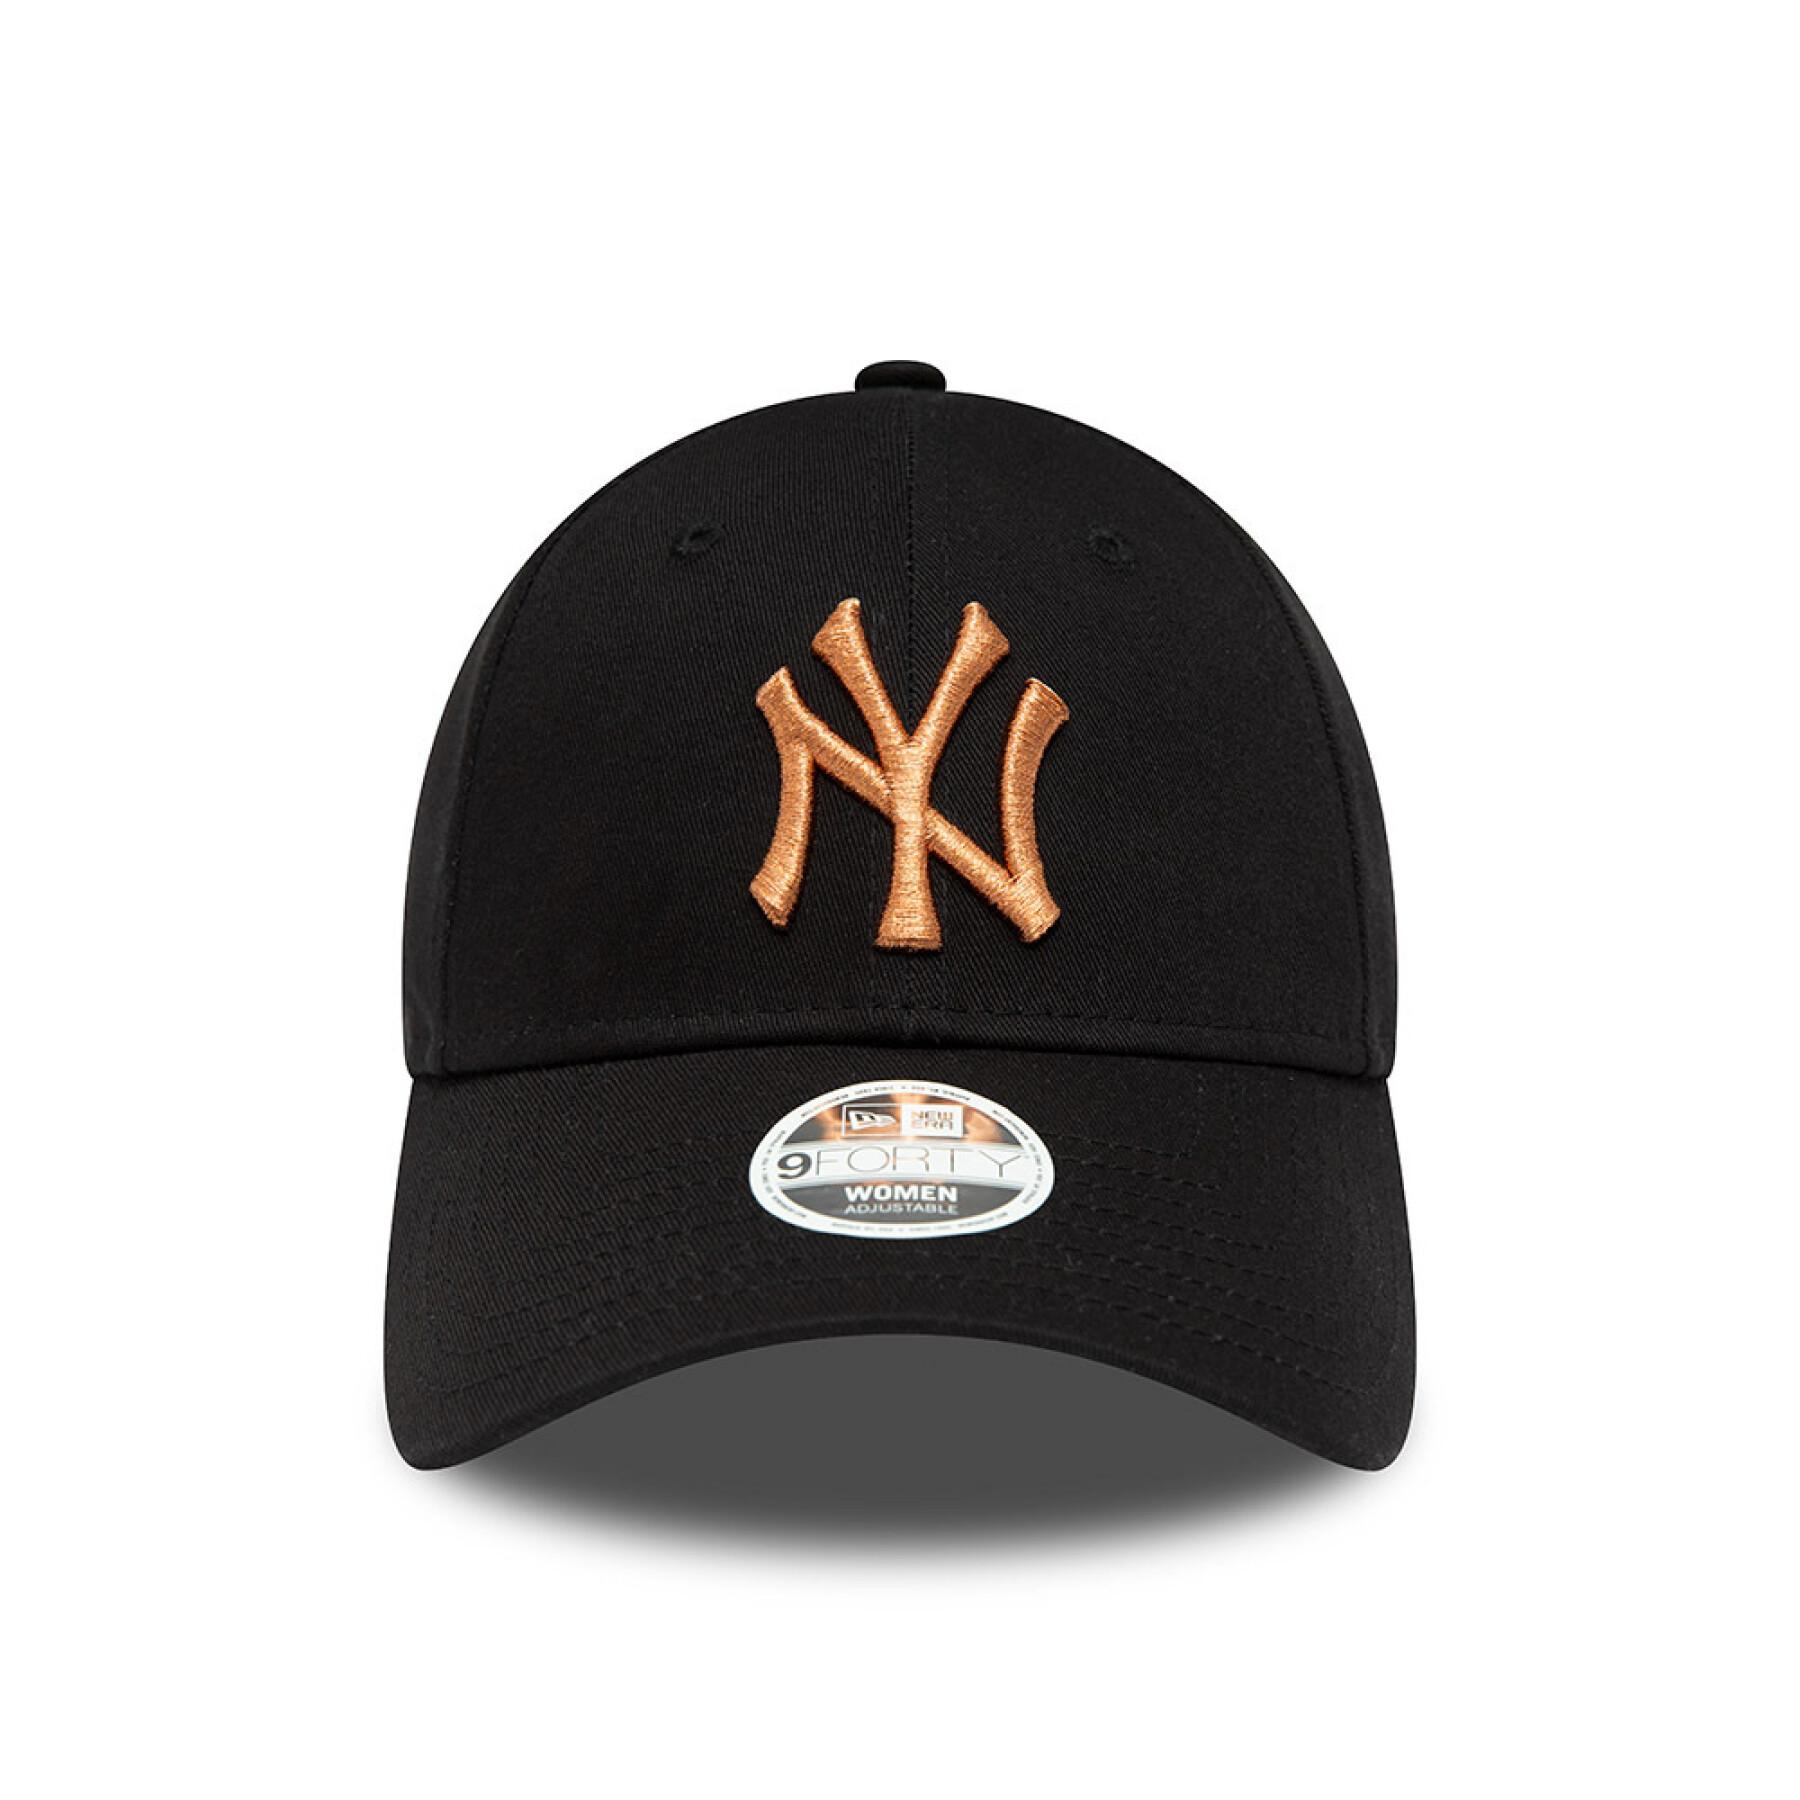 Casquette femme New York Yankees Metallic Logo